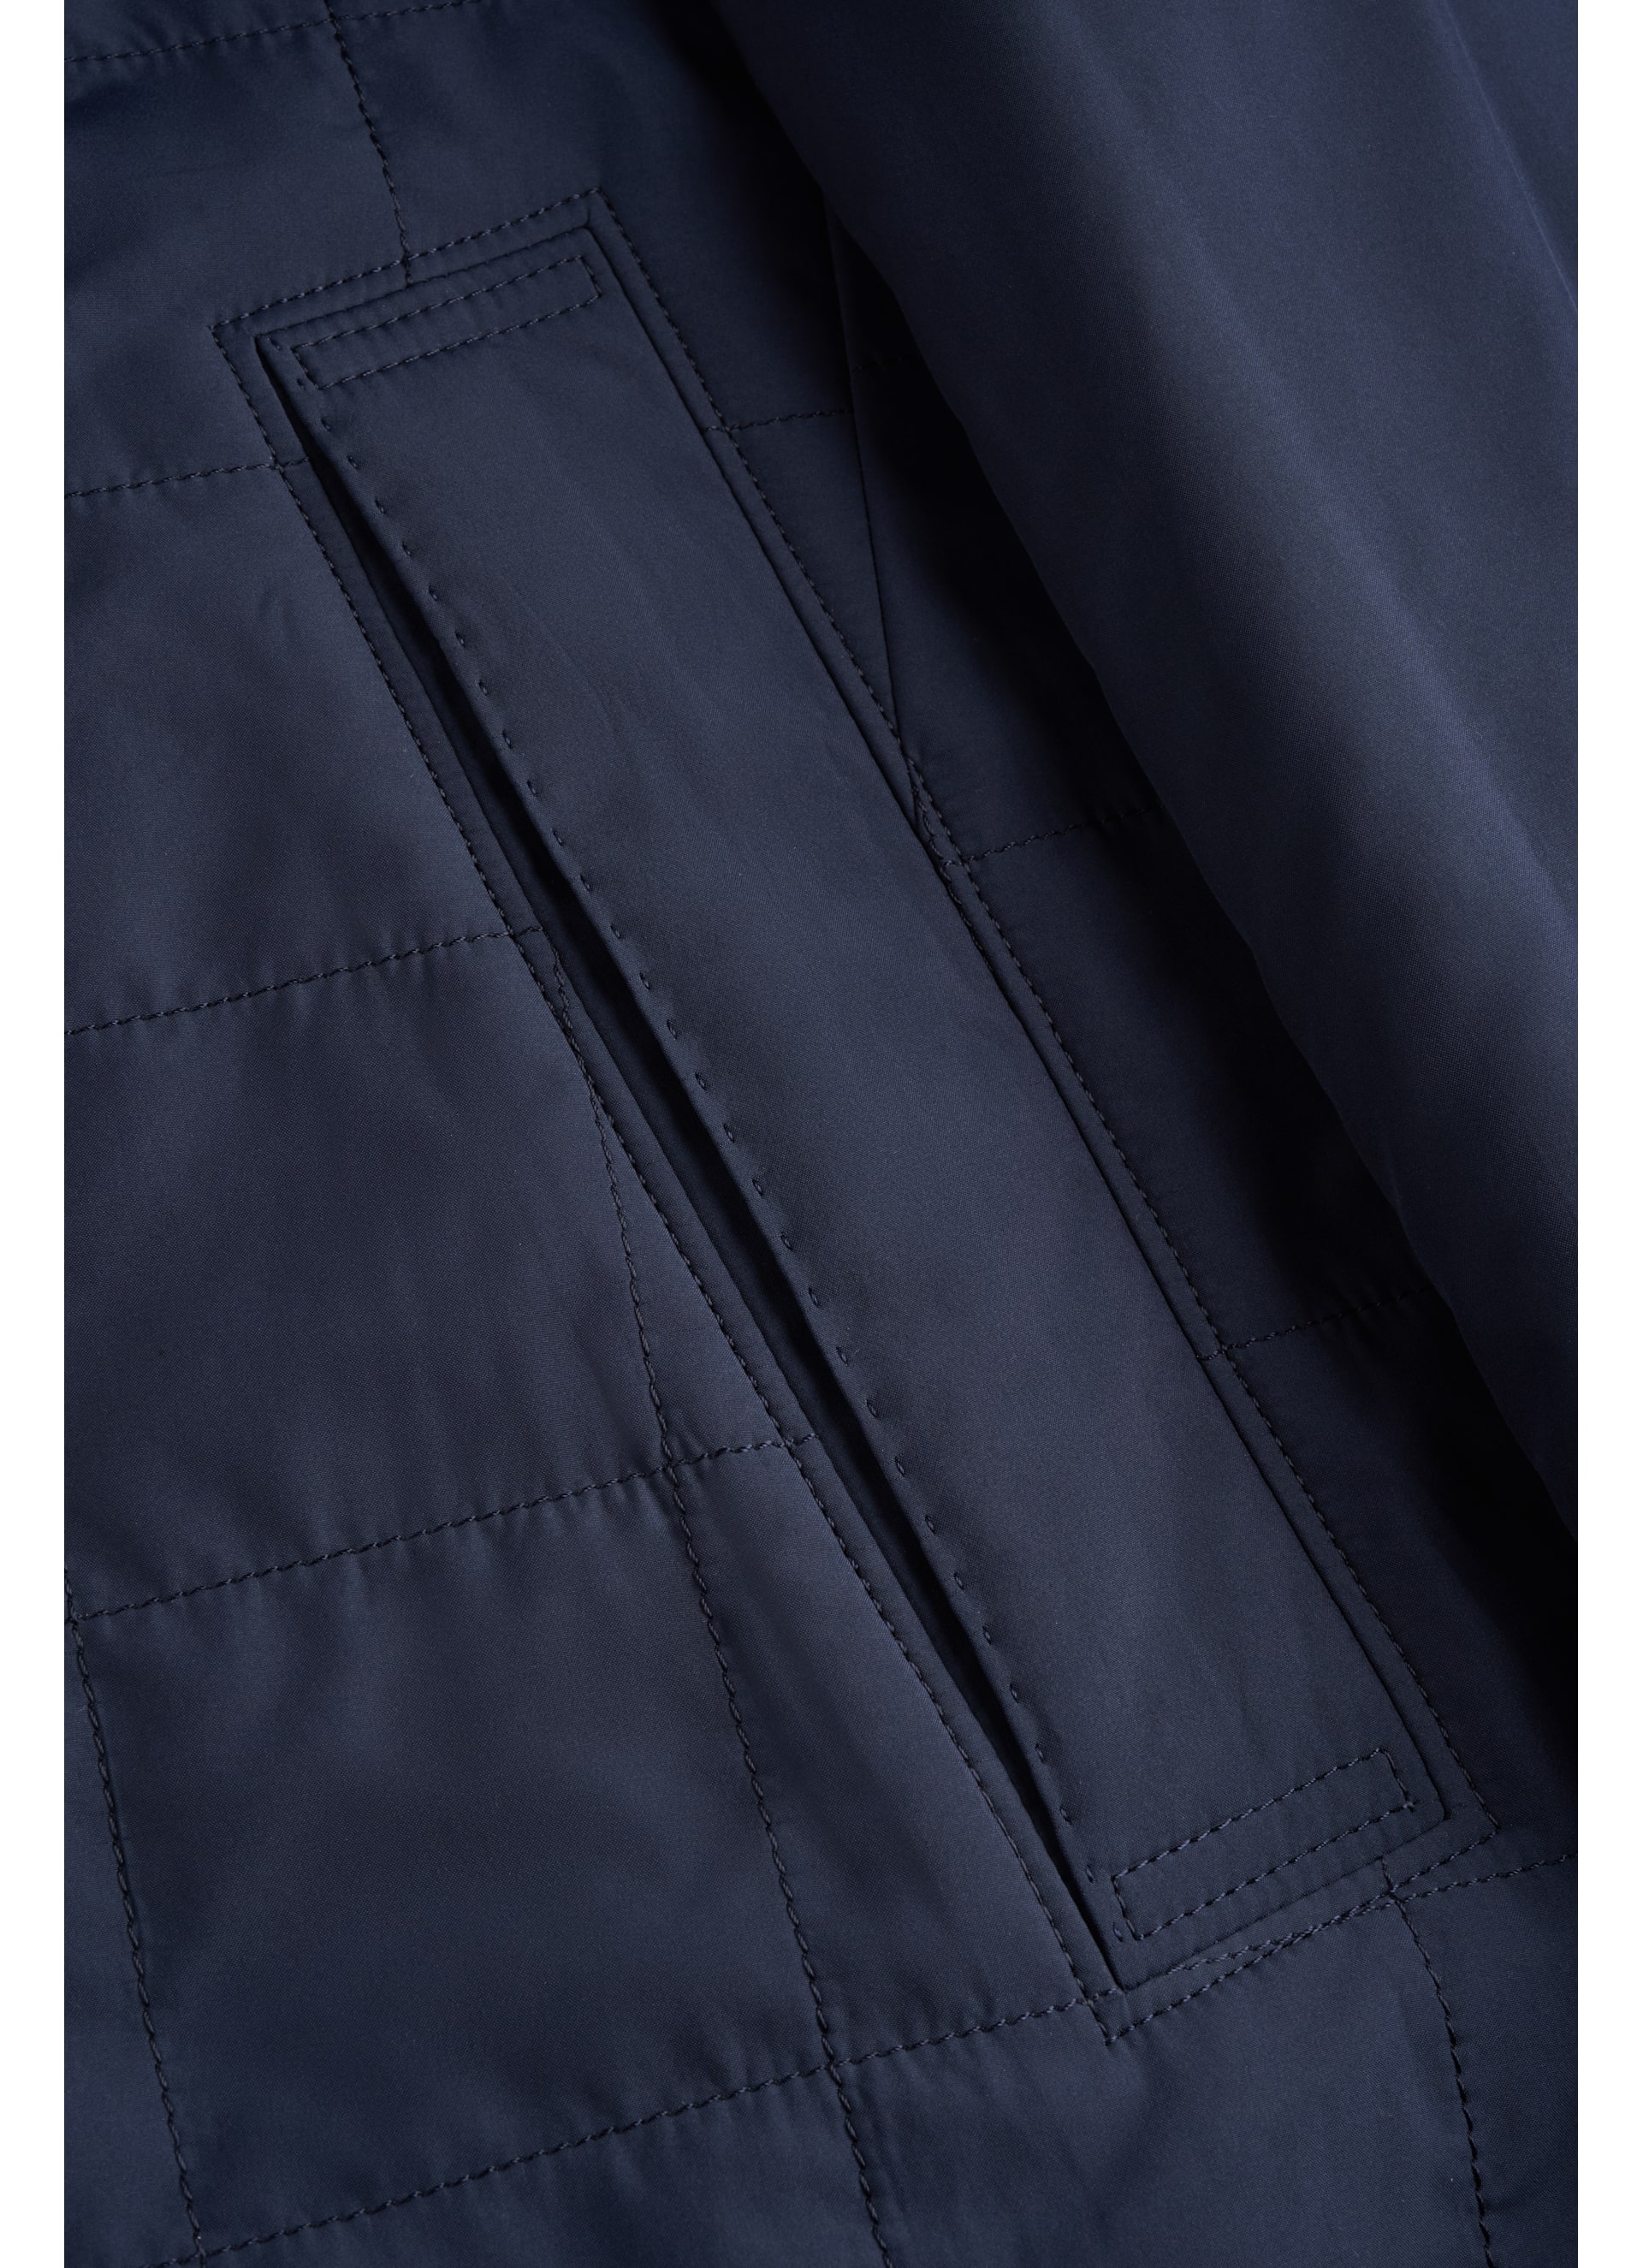 Navy Double Face Coat Jort J587i | Suitsupply Online Store